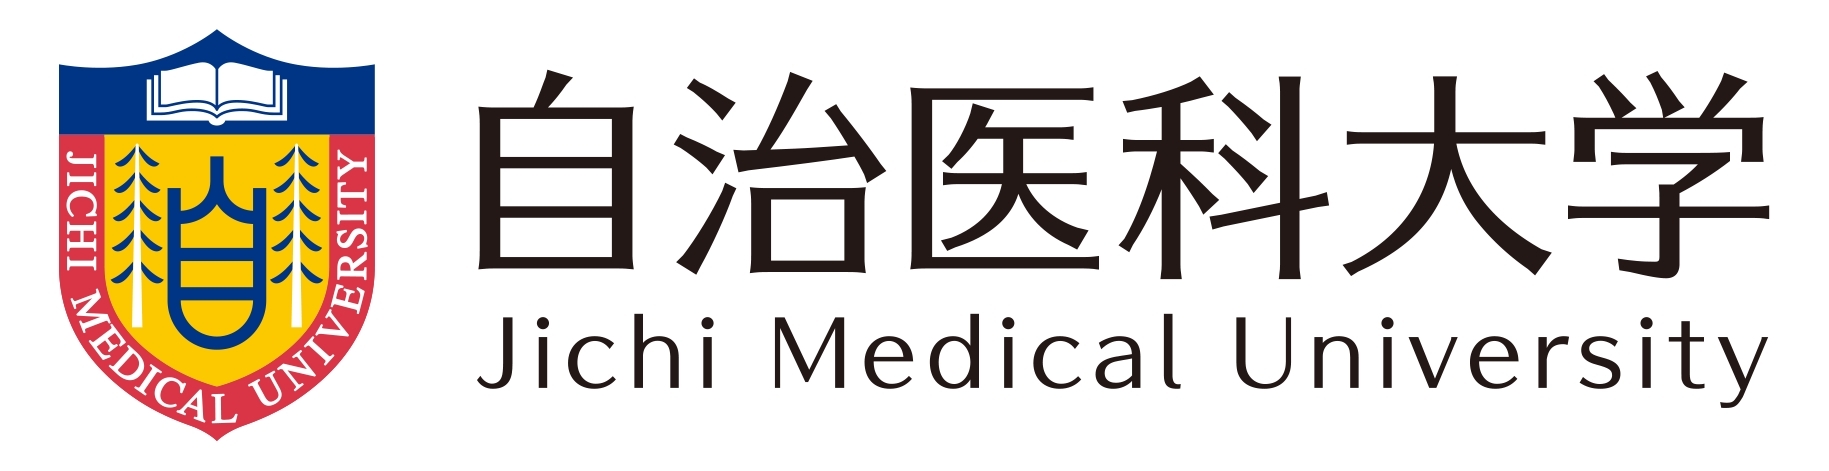 Jichi Medical University Japan